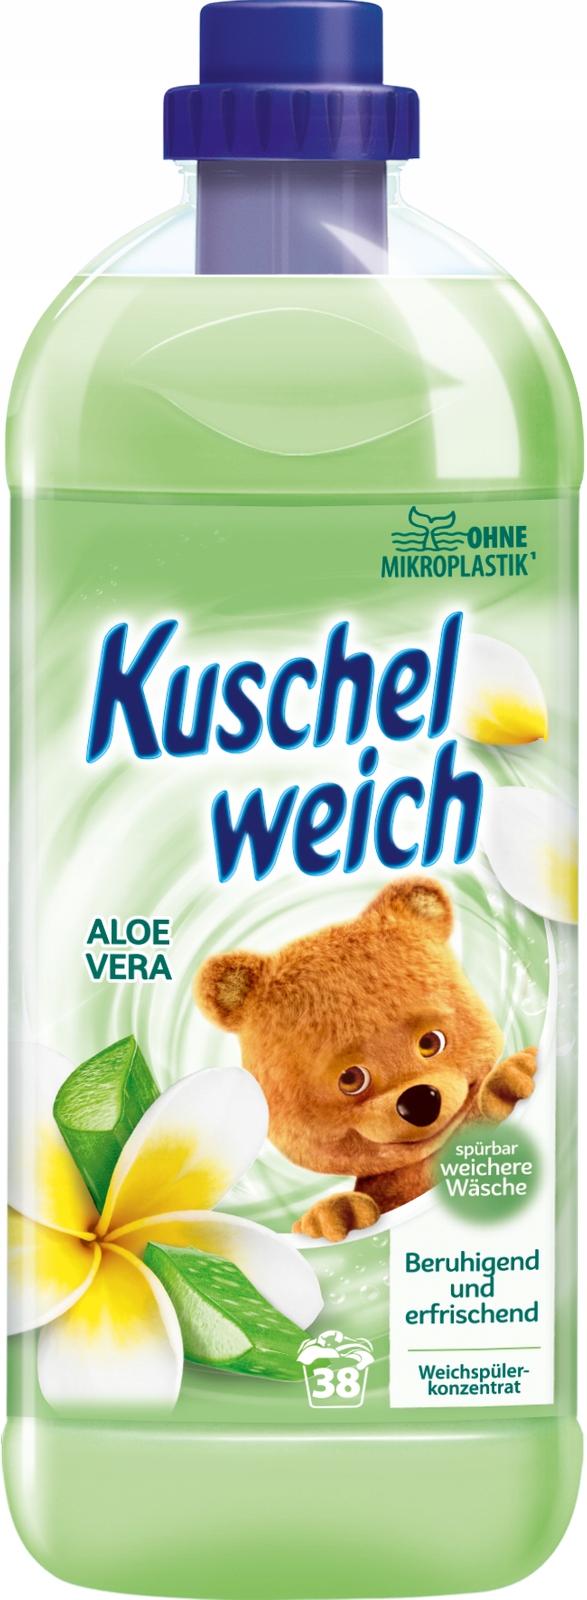 Kuschelweich Płyn do płukania Aloe Vera 1L DE